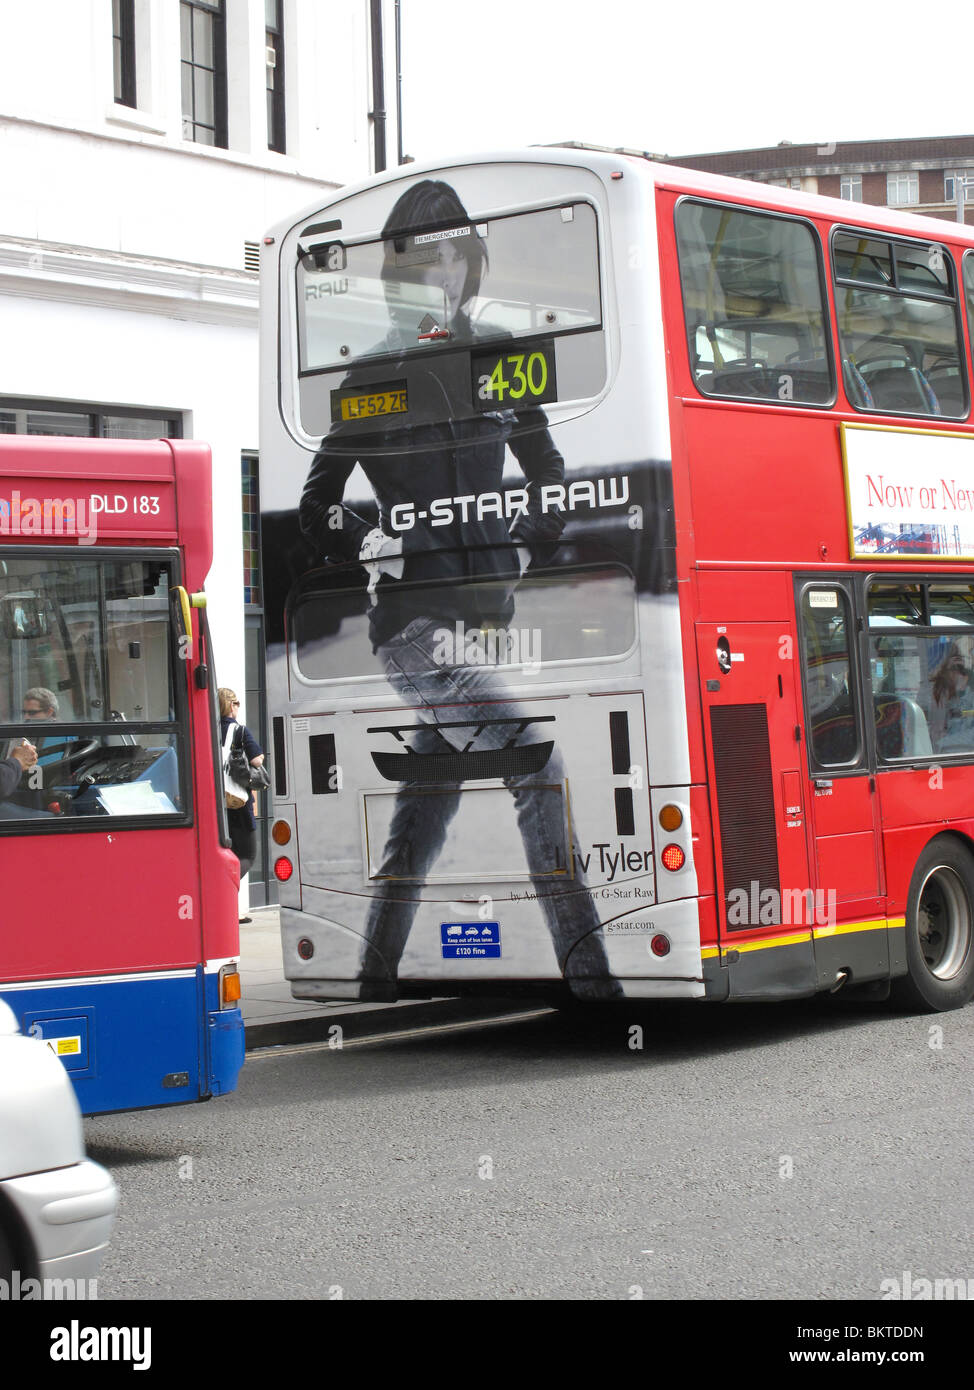 G Star Raw Advert London Bus Stock Photo - Alamy